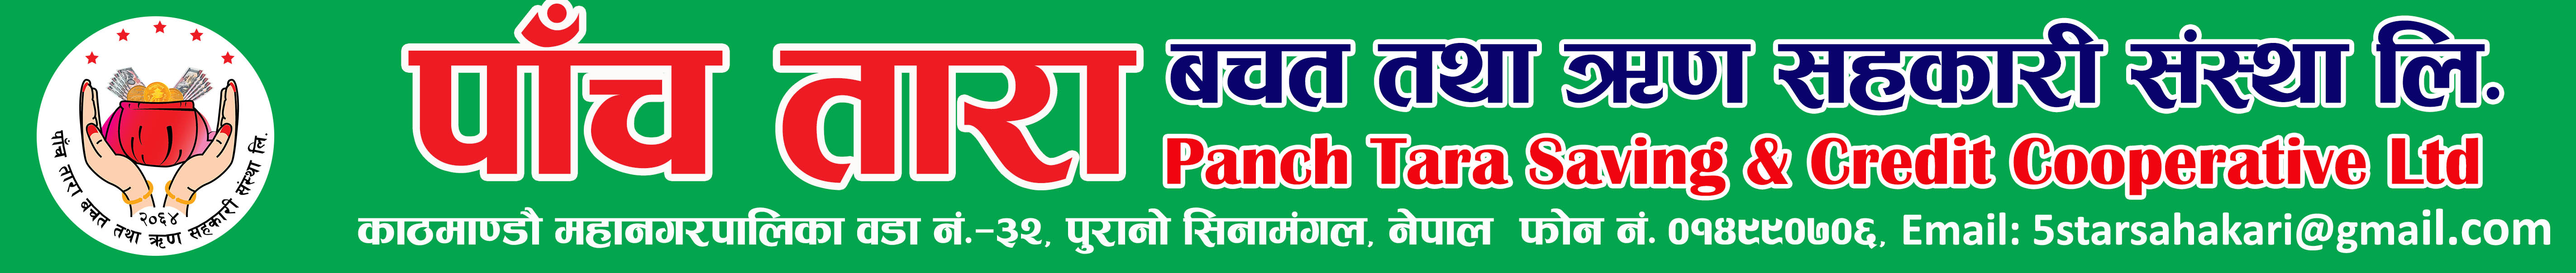 Panch Tara Saving and Credit Co-operative Ltd.